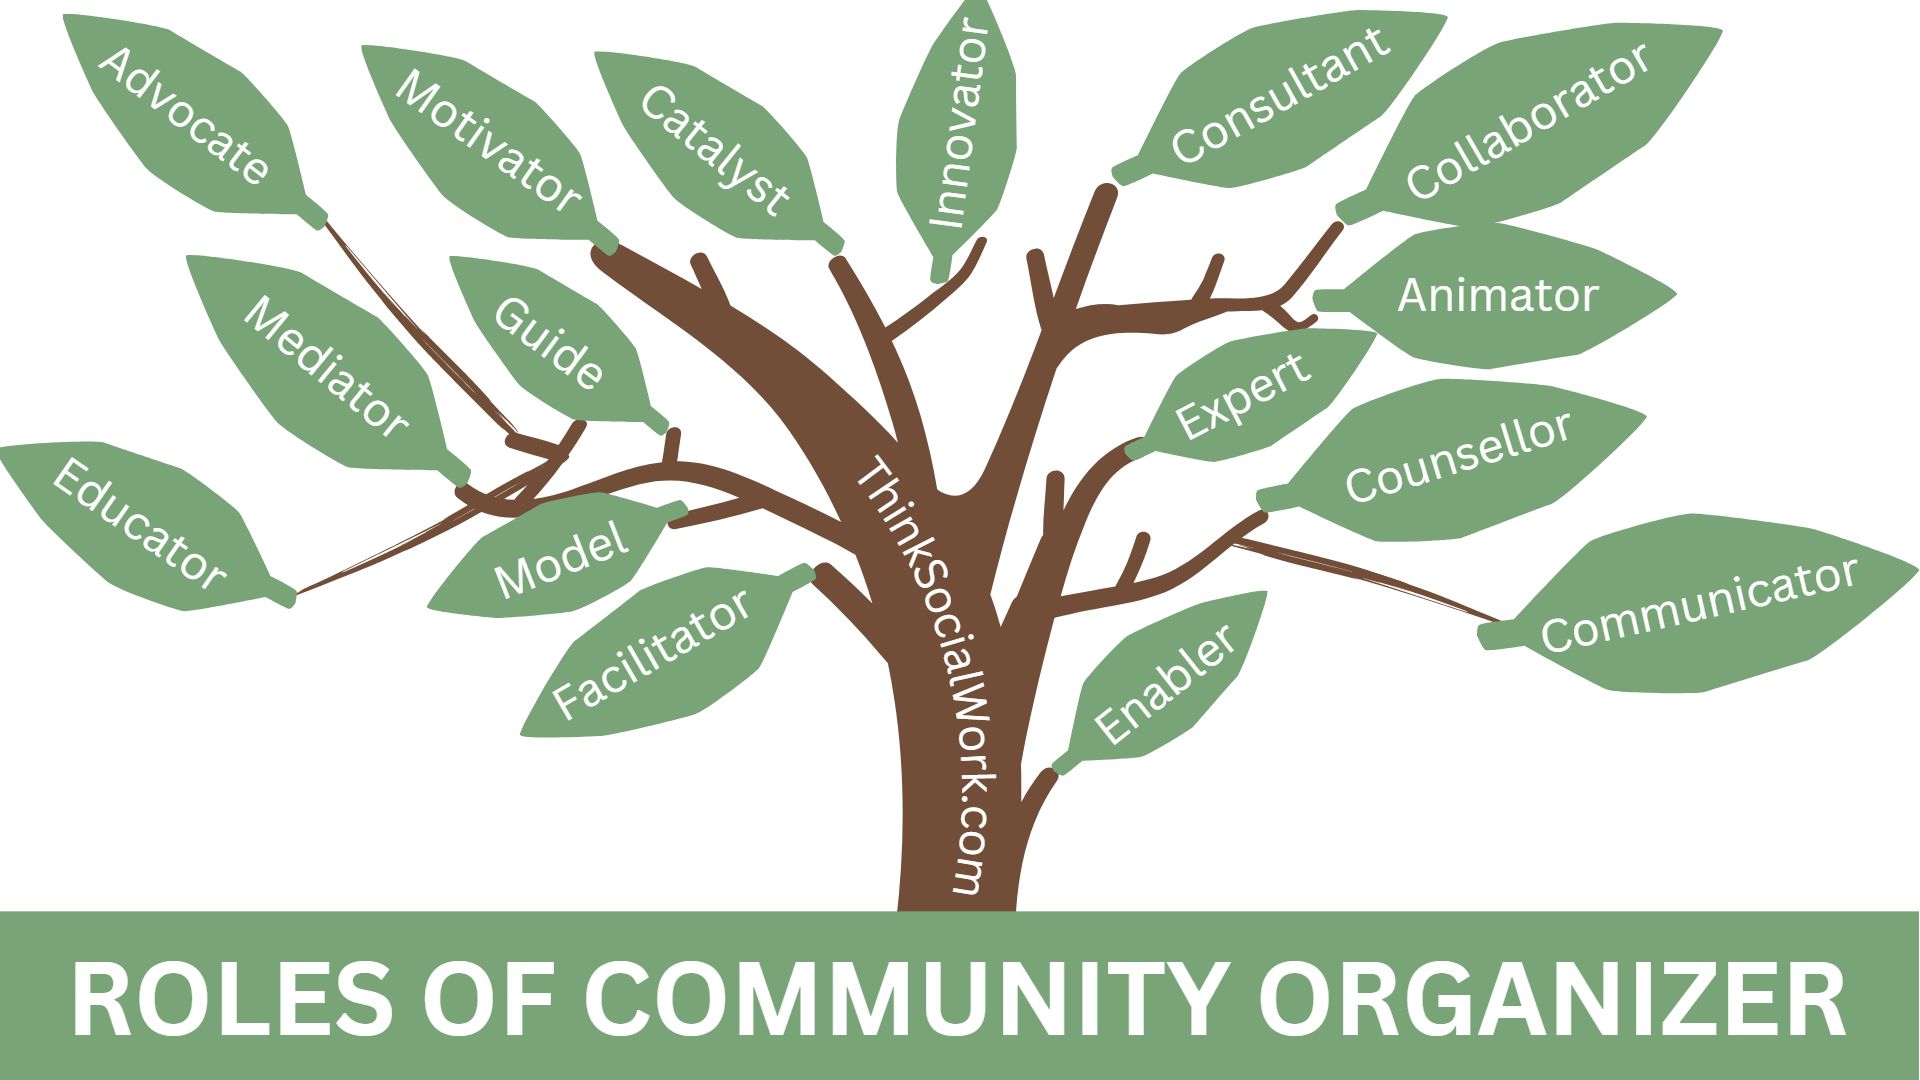 Roles of Community Organizer